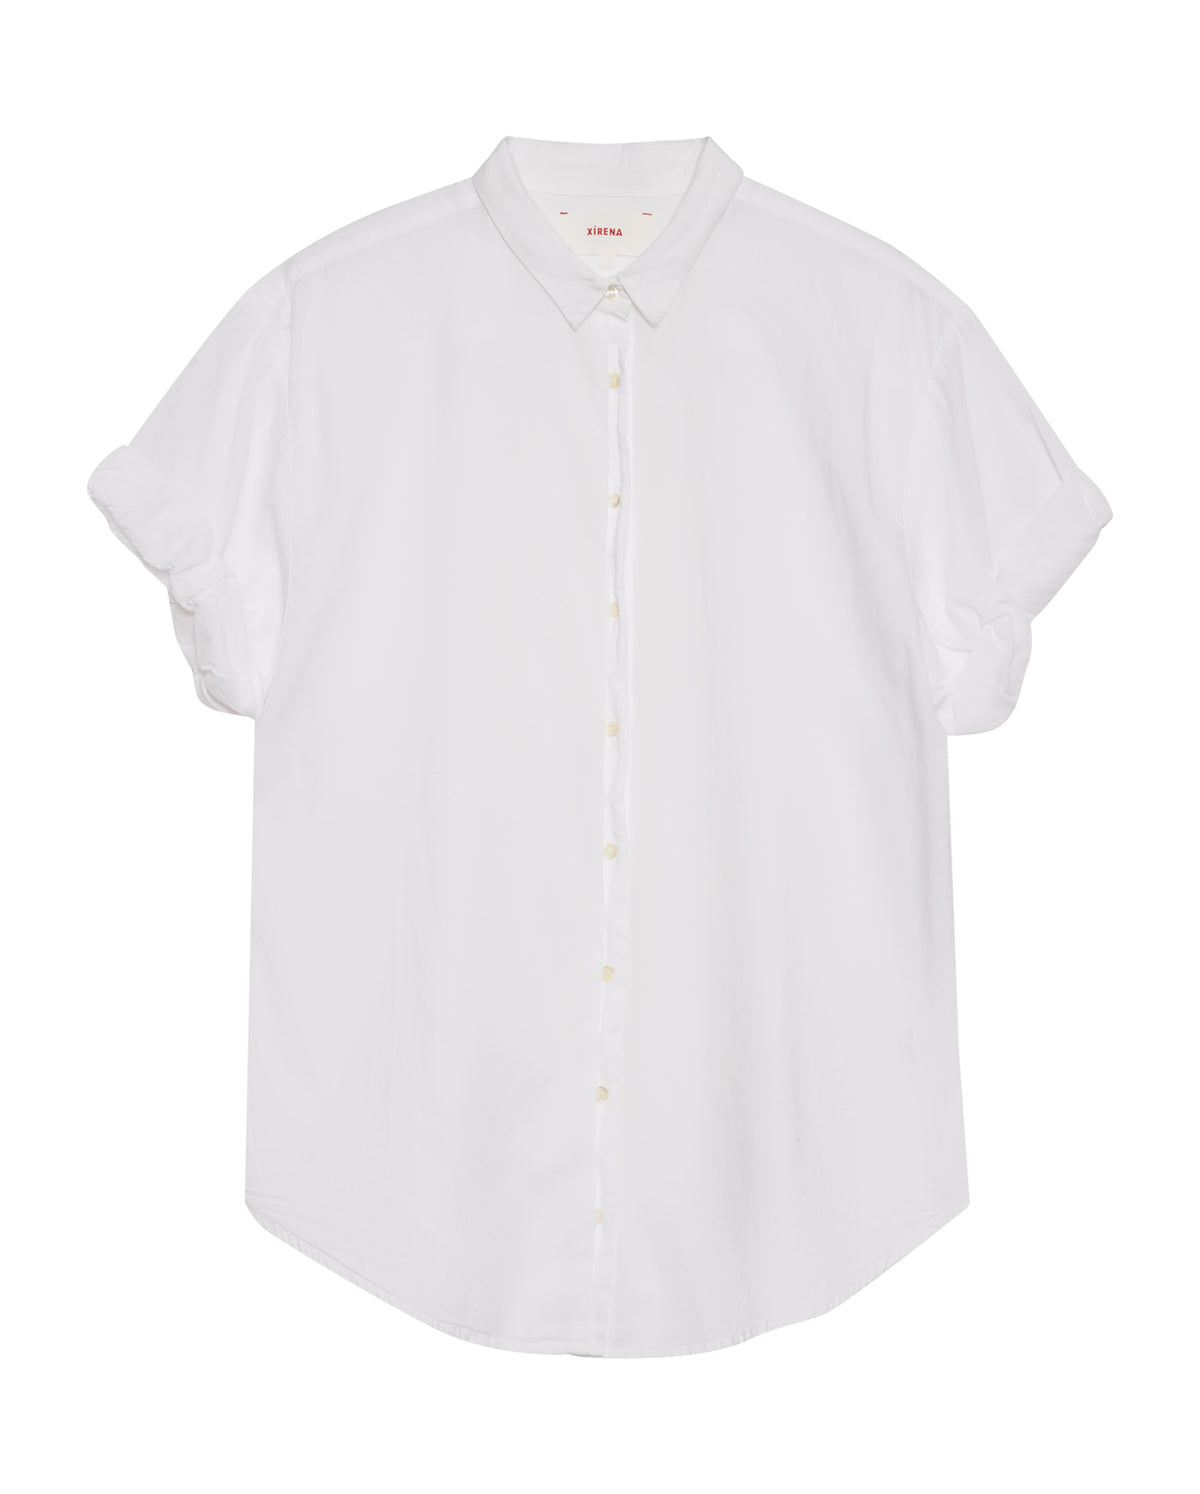 Channing Shirt - White